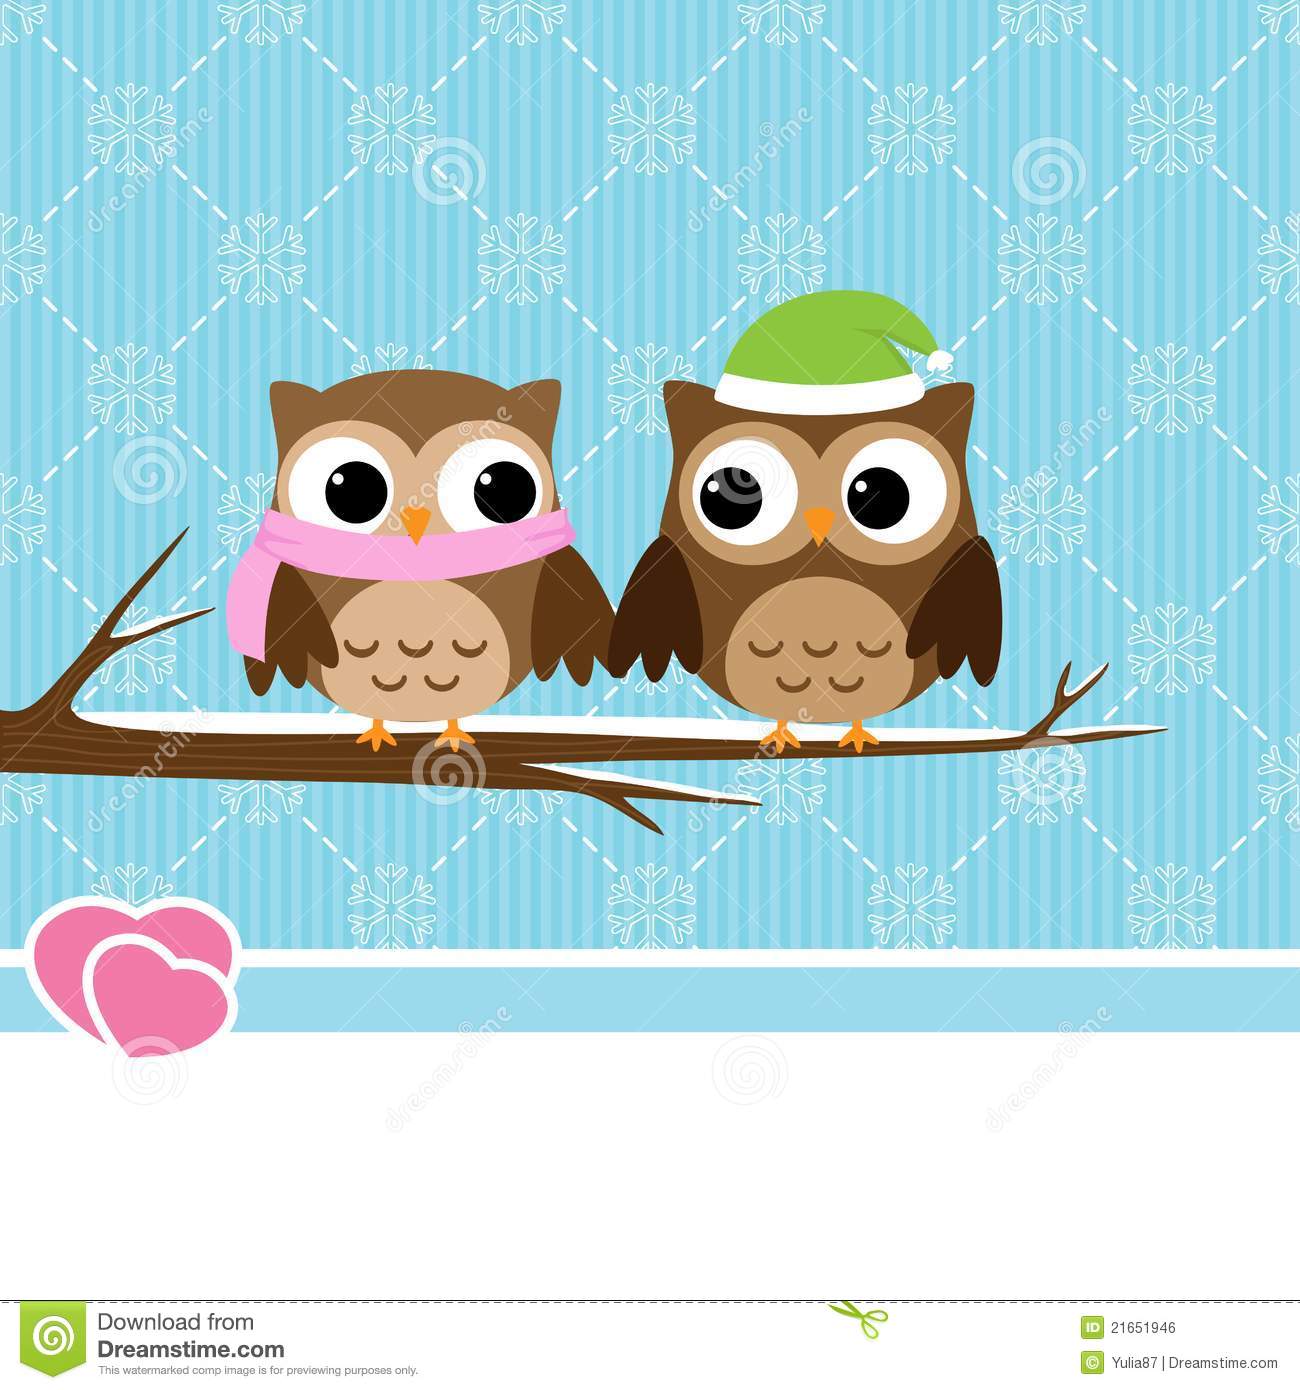 Winter Owl Couple Royalty Free Stock Image   Image  21651946